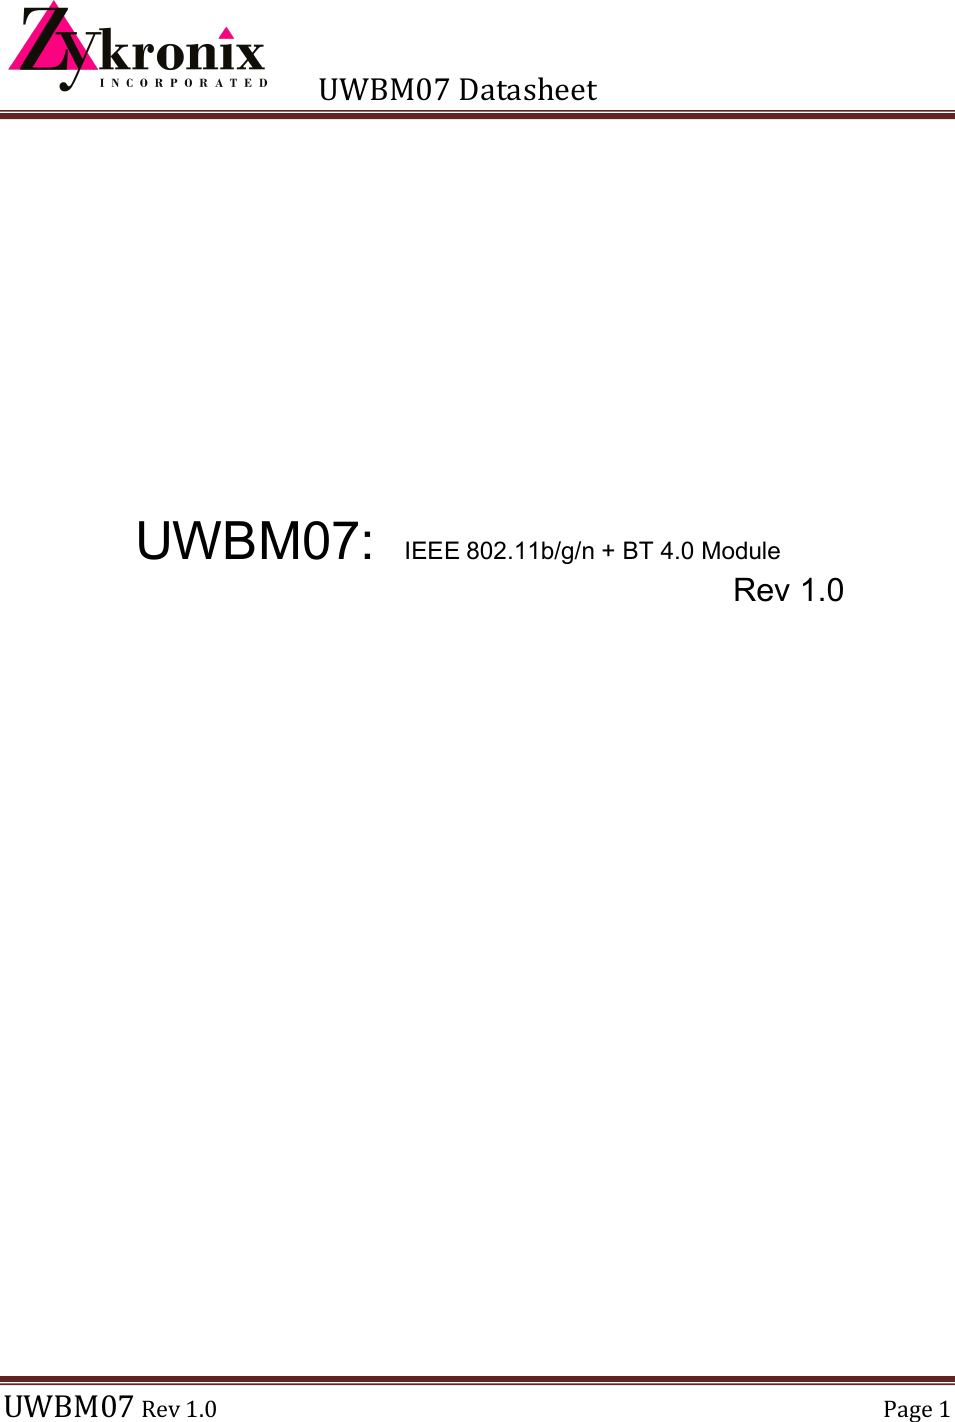      UWBM07 Datasheet  UWBM07 Rev 1.0  Page 1                 UWBM07:  IEEE 802.11b/g/n + BT 4.0 Module                           Rev 1.0 